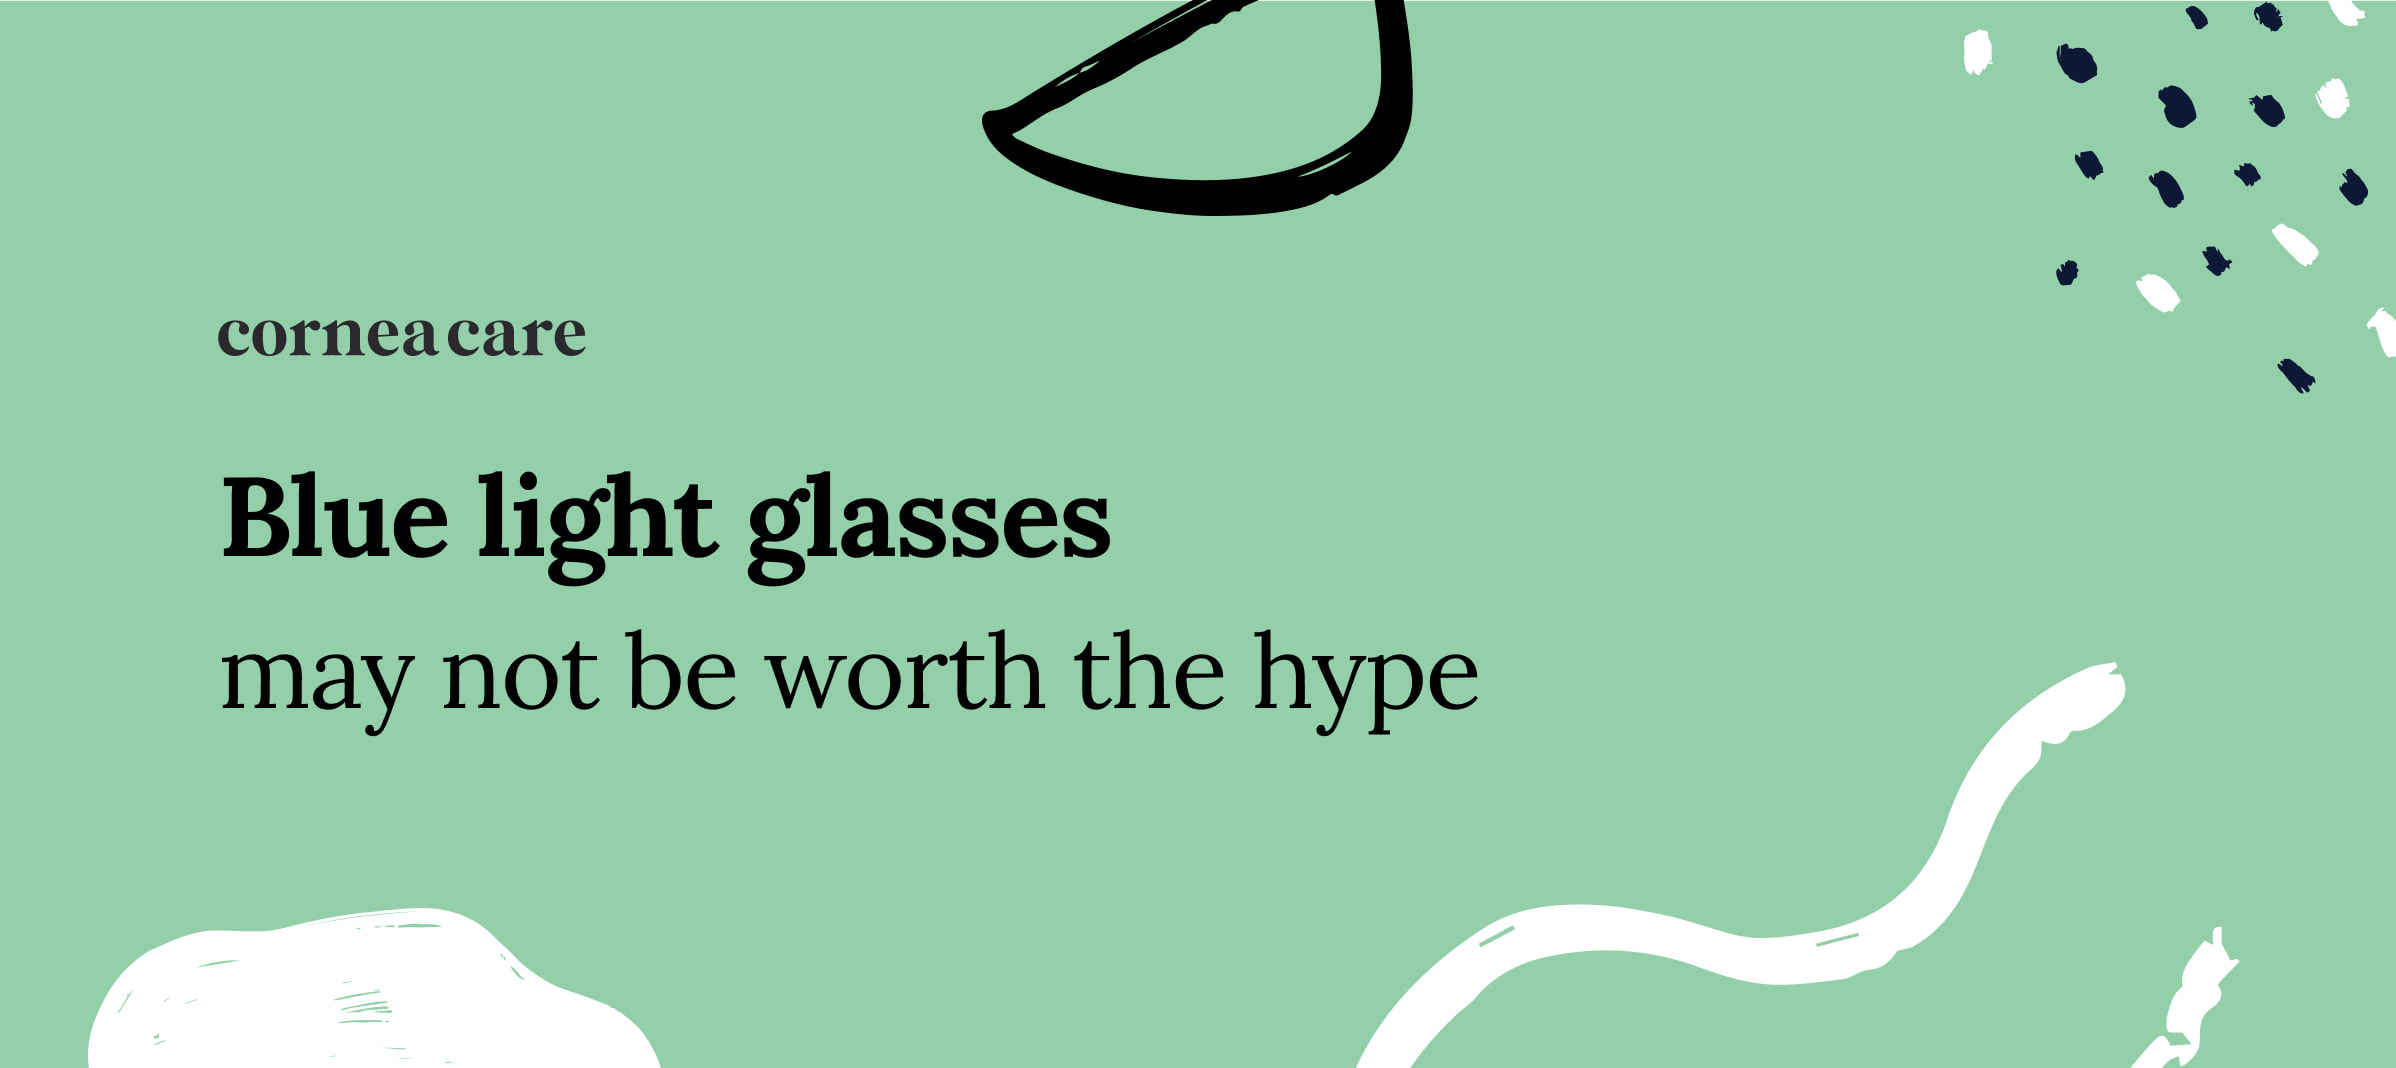 Do blue light glasses actually work?